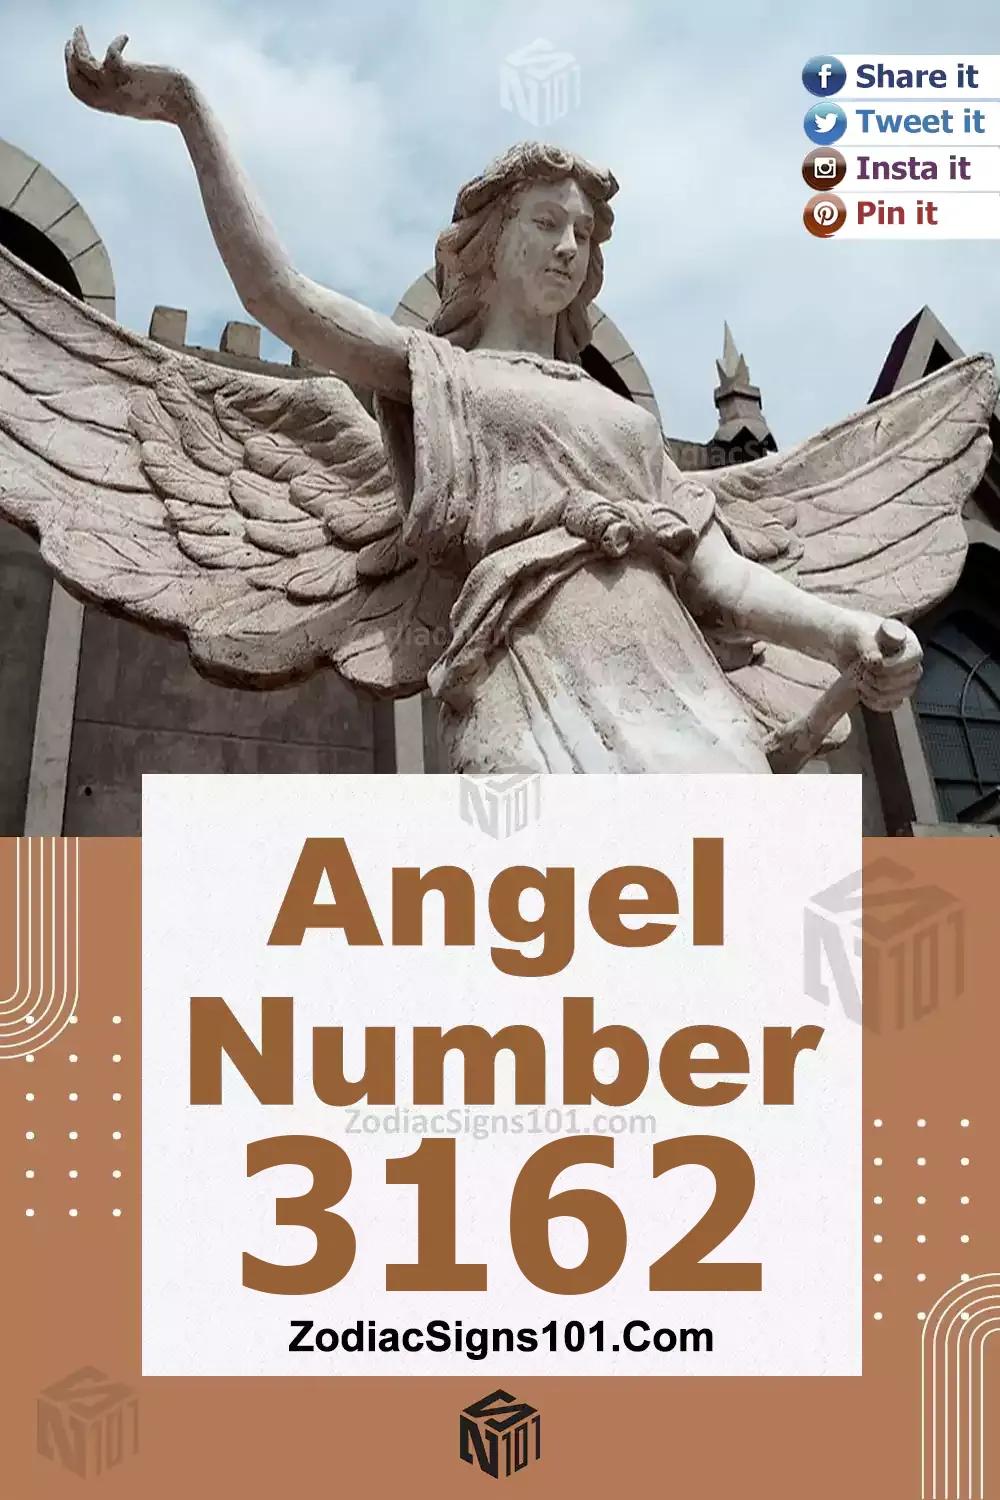 3162-Angel-Number-Meaning.jpg